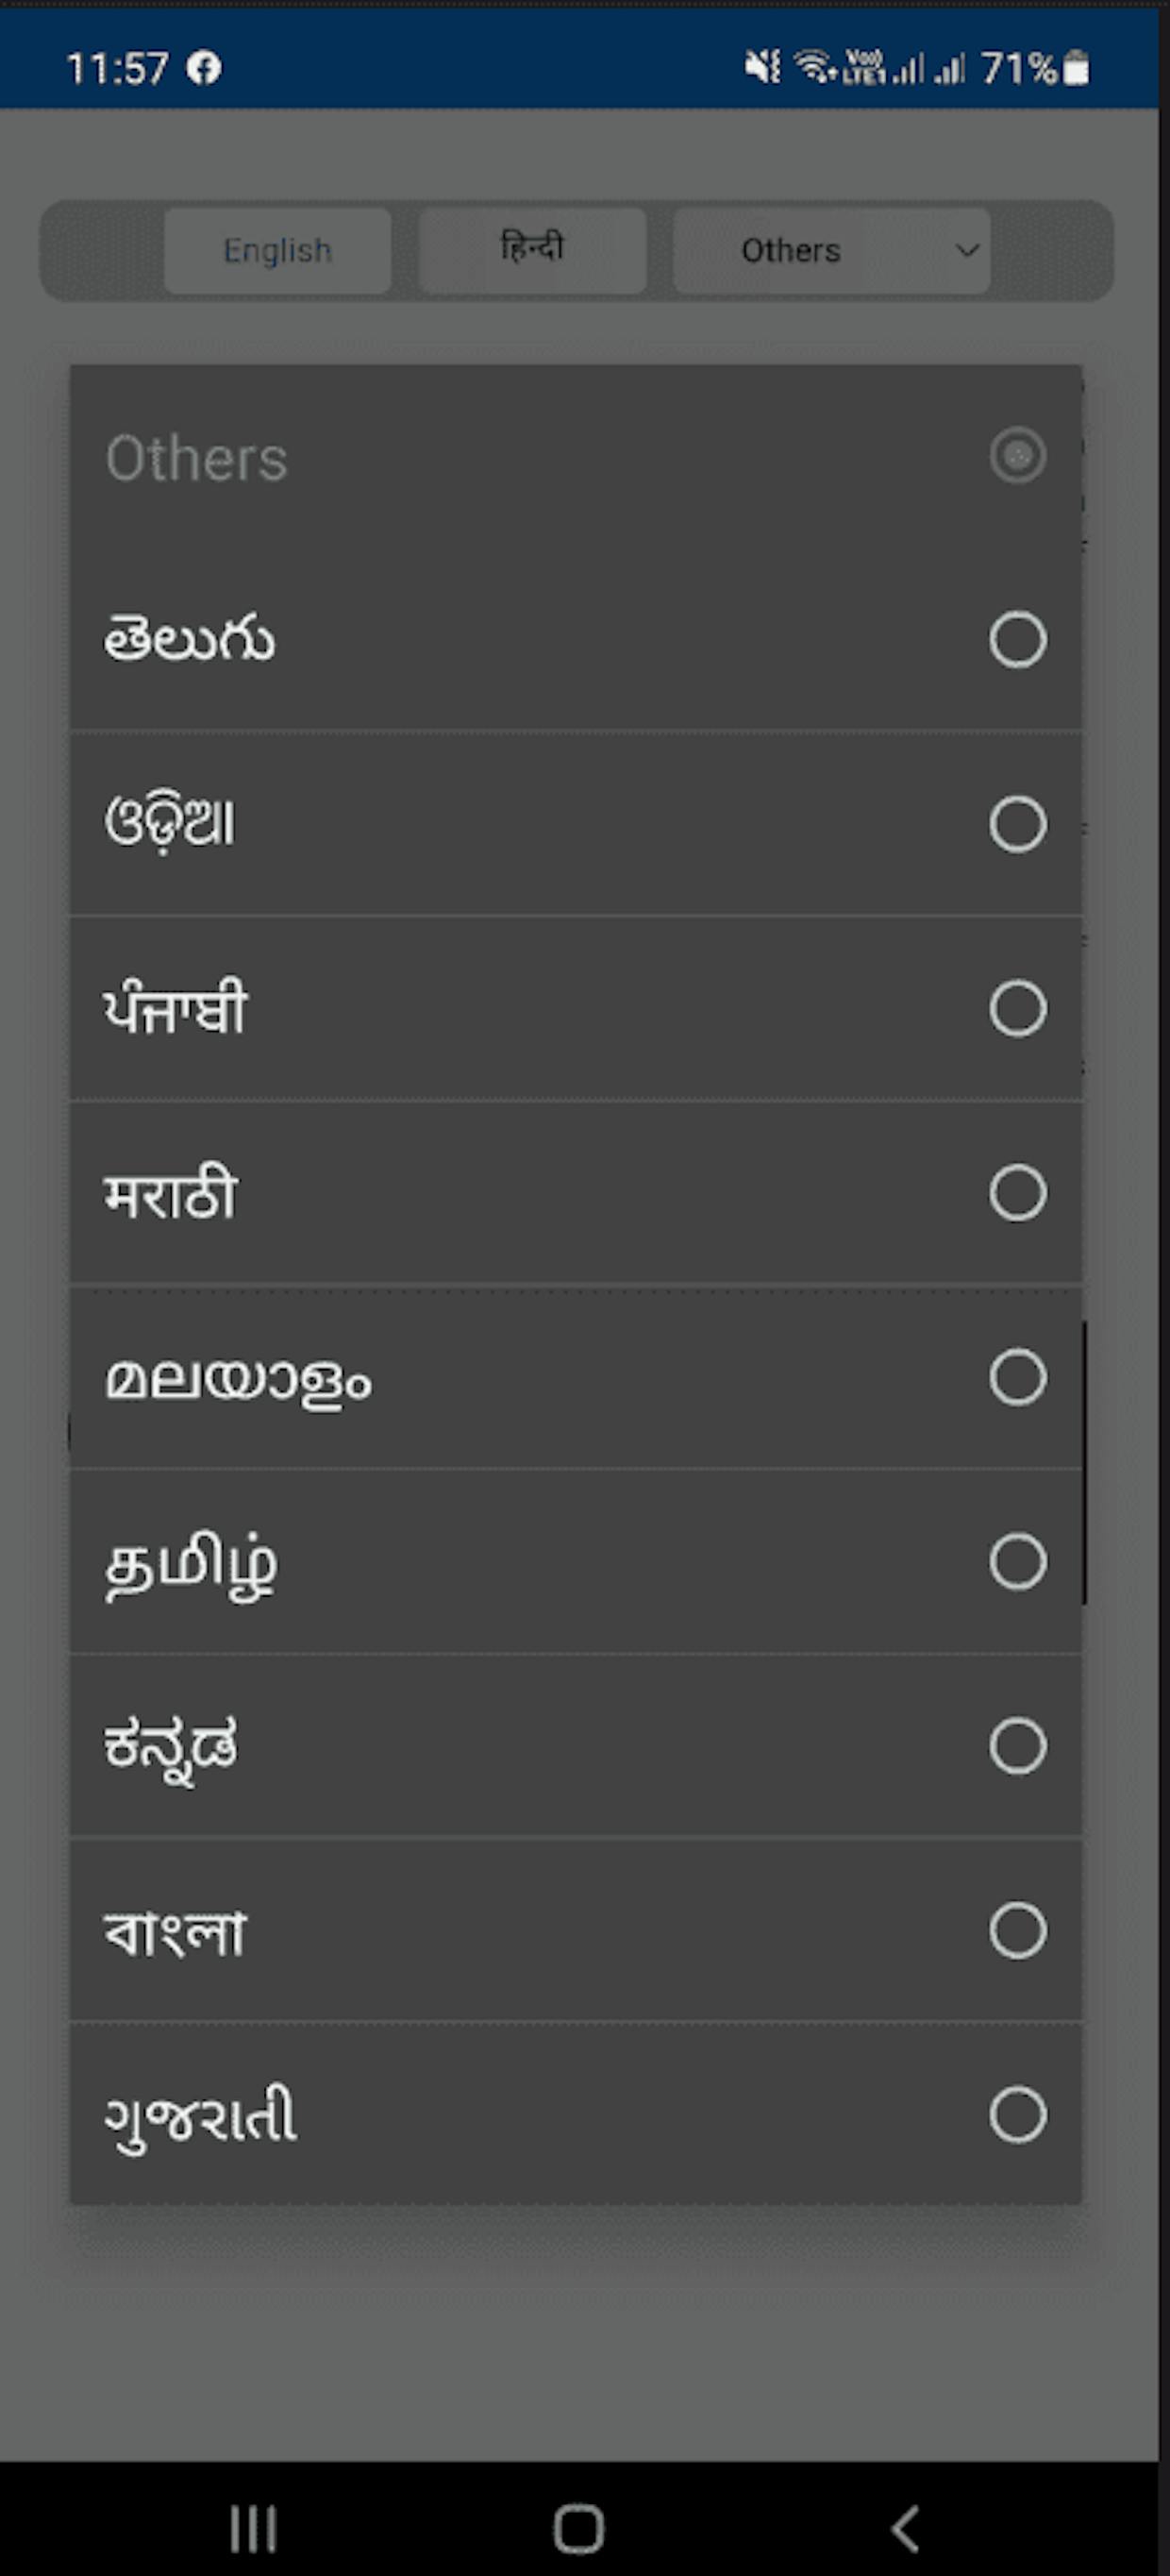 mobile app with multi-language option